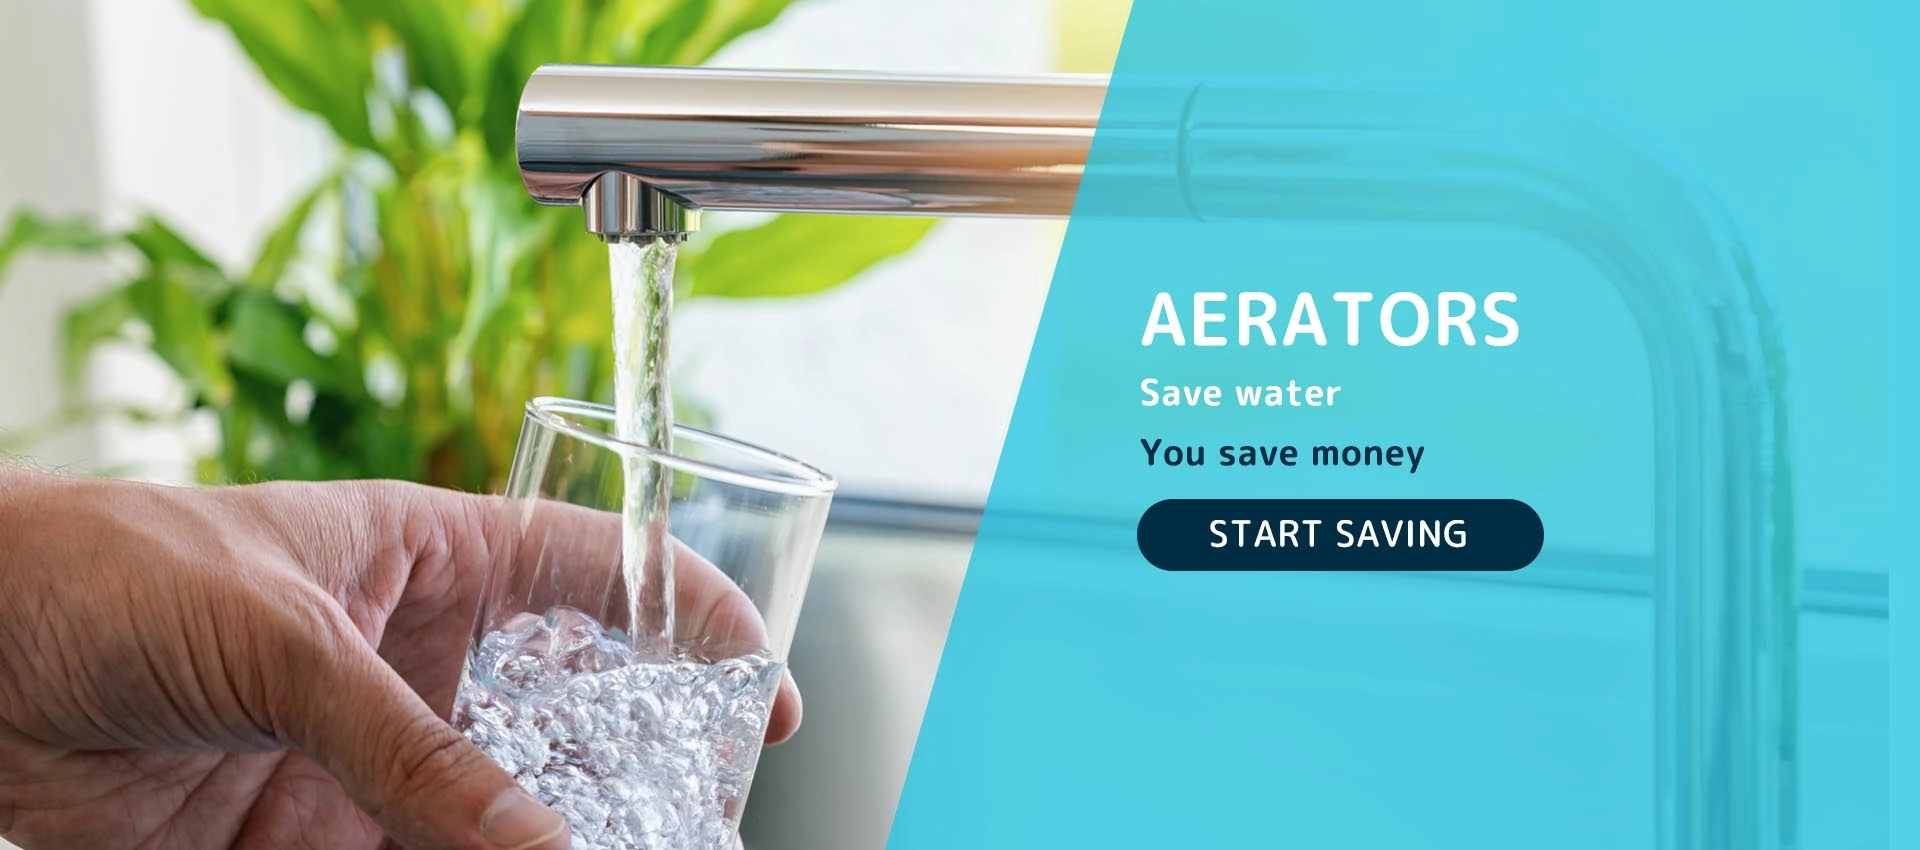 Water-saving tap aerators